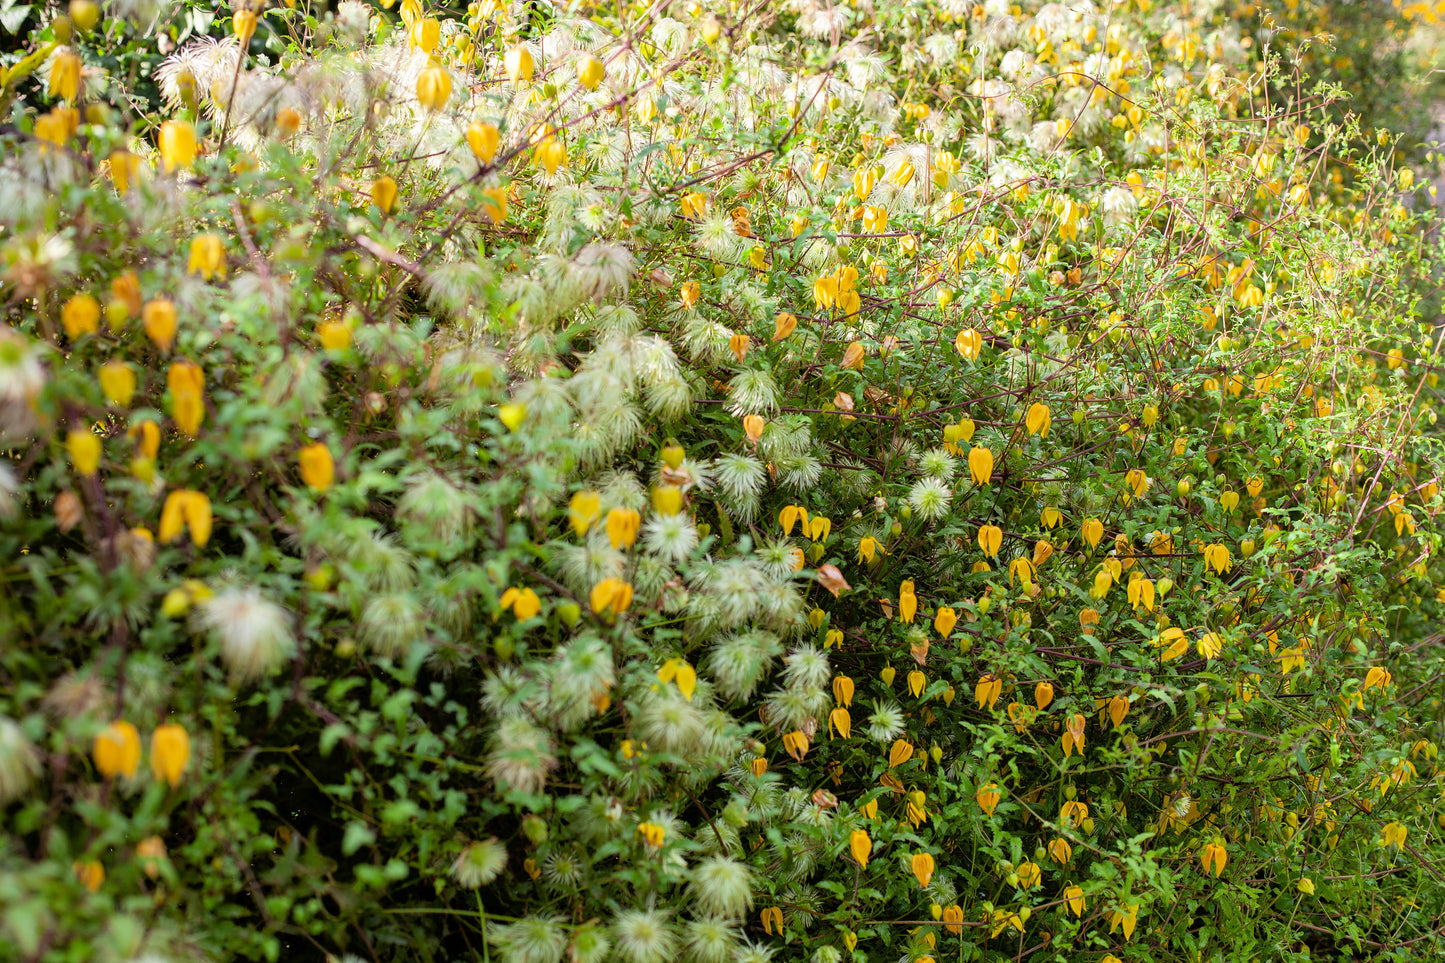 10 Yellow CLEMATIS RADAR LOVE Vine Climber Clematis Tangutica Flower Seeds